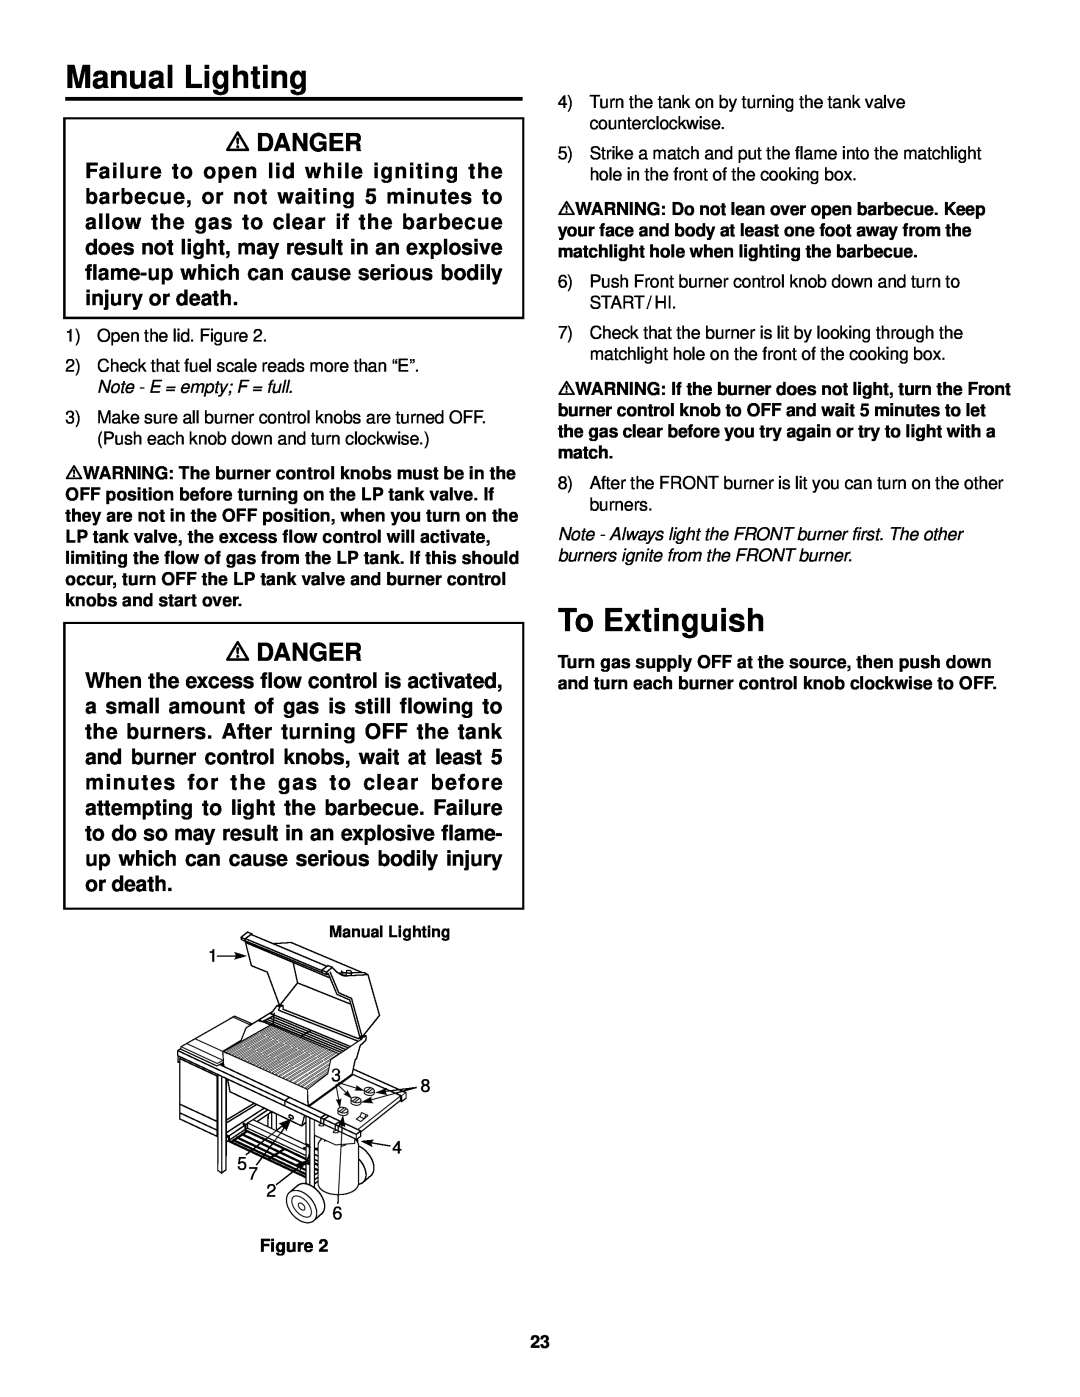 Weber 98583 owner manual Manual Lighting, To Extinguish, mDANGER 